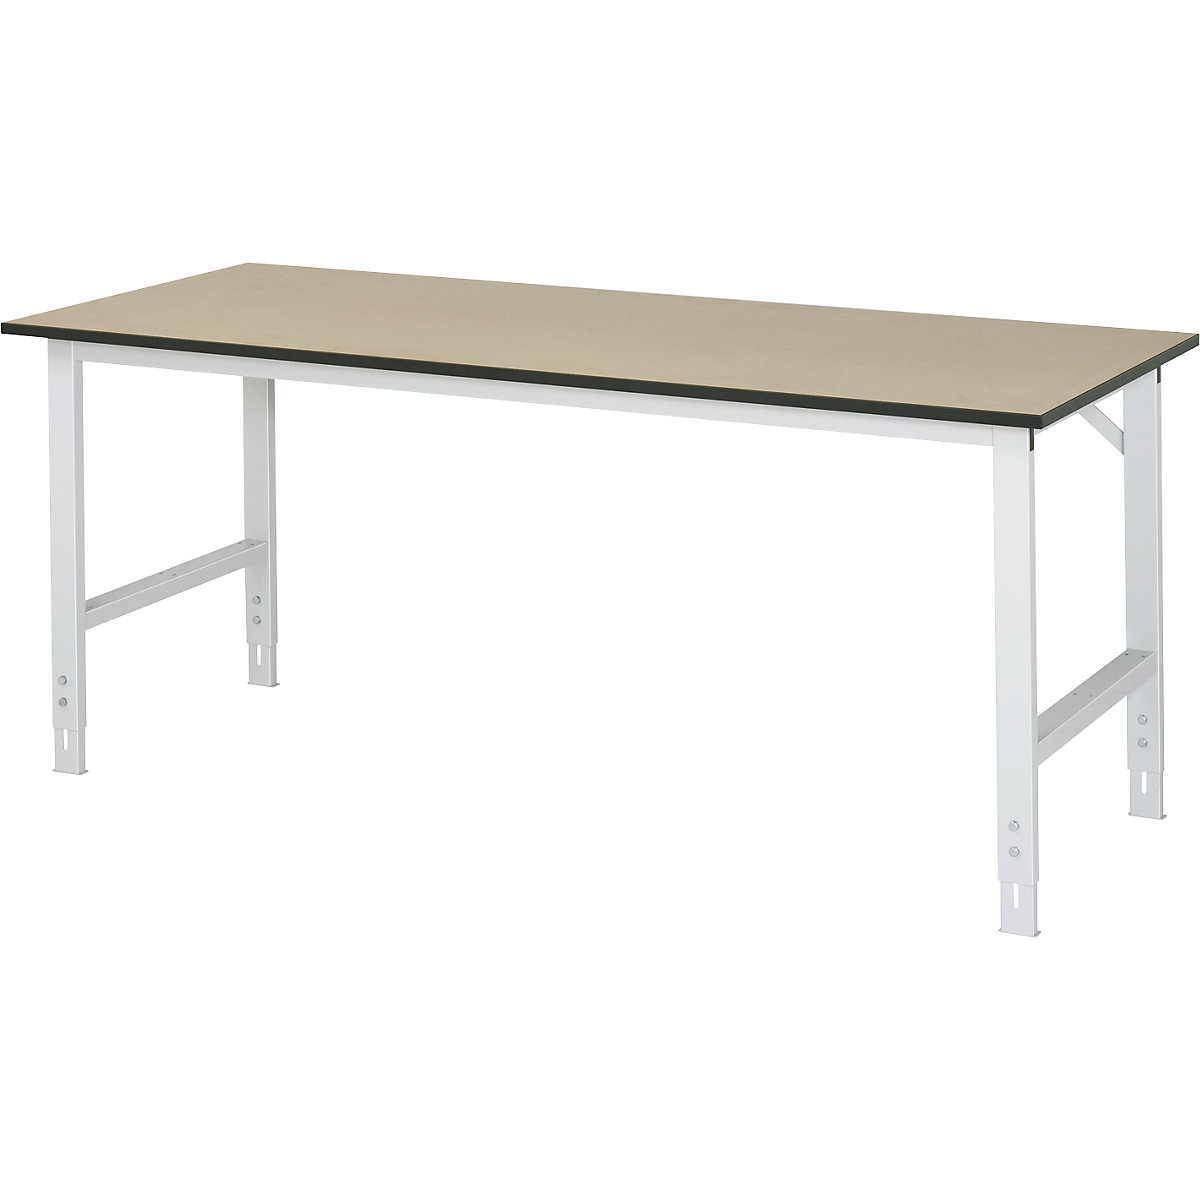 Delovna miza, nastavljiva po višini – RAU, 760 – 1080 mm, MDF plošča, ŠxG 2000 x 800 mm, svetlo siva-14